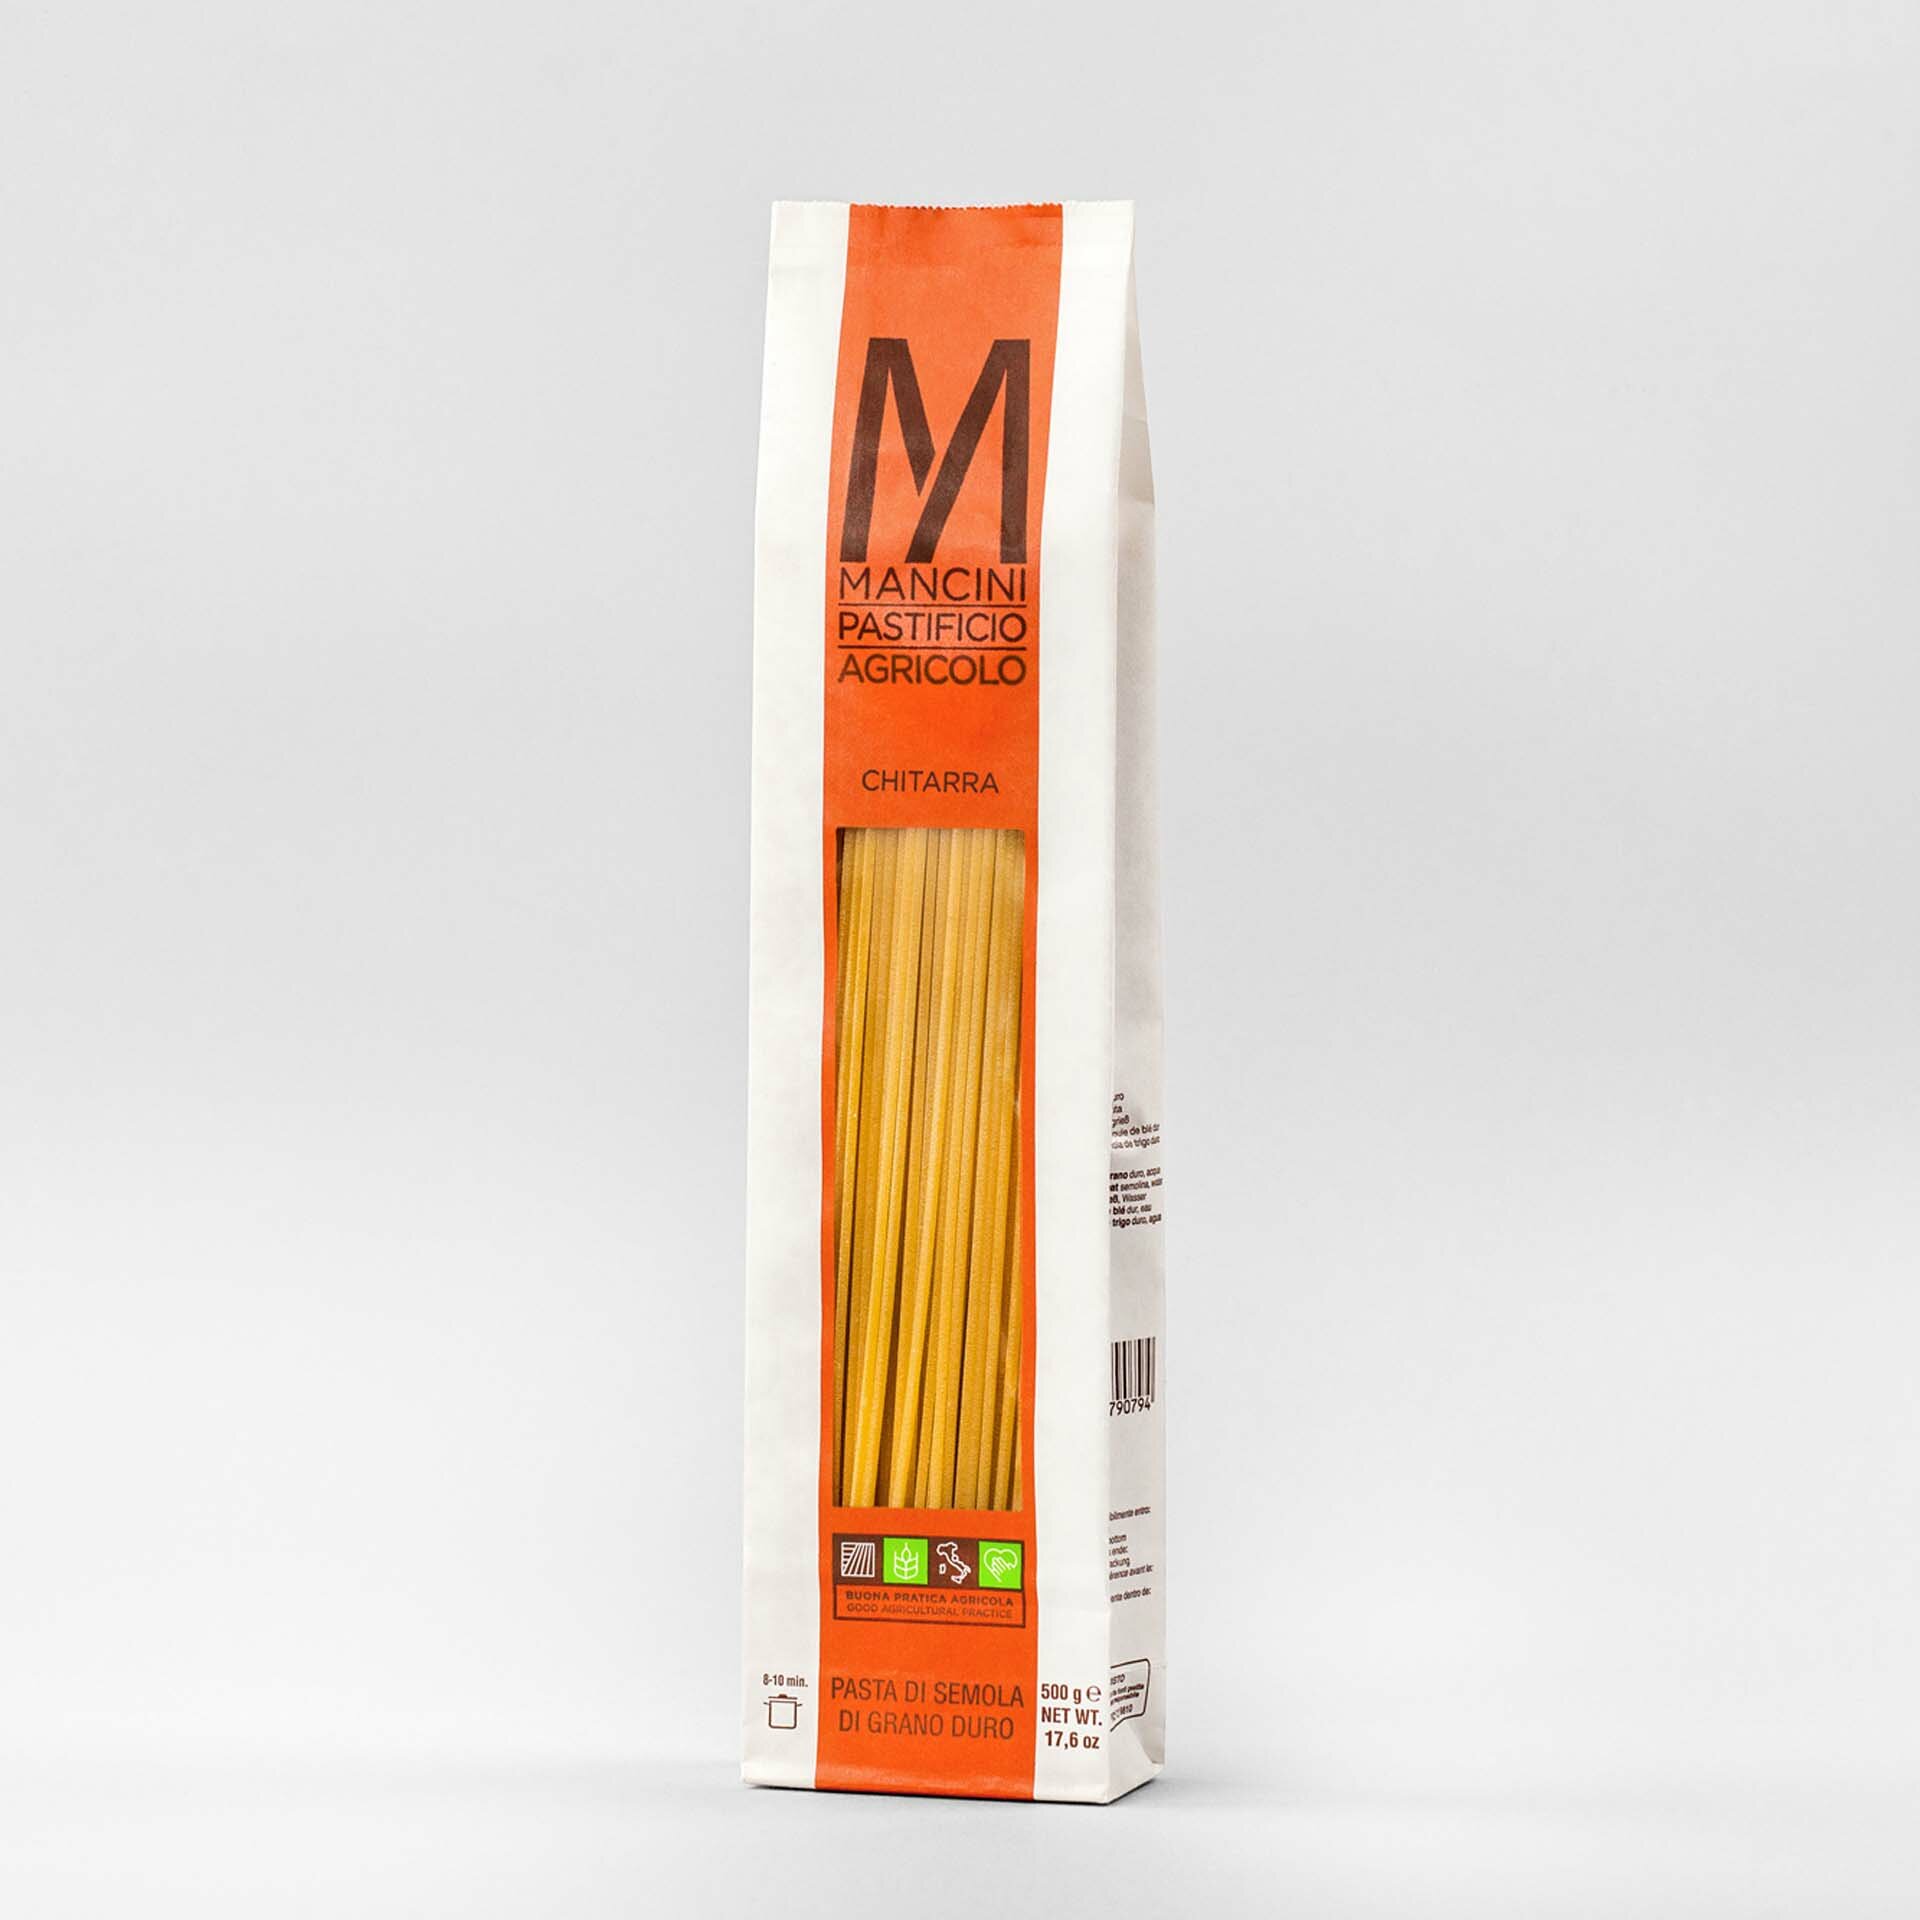 Chitarra Mancini (Mancini Square Spaghetti) 500g